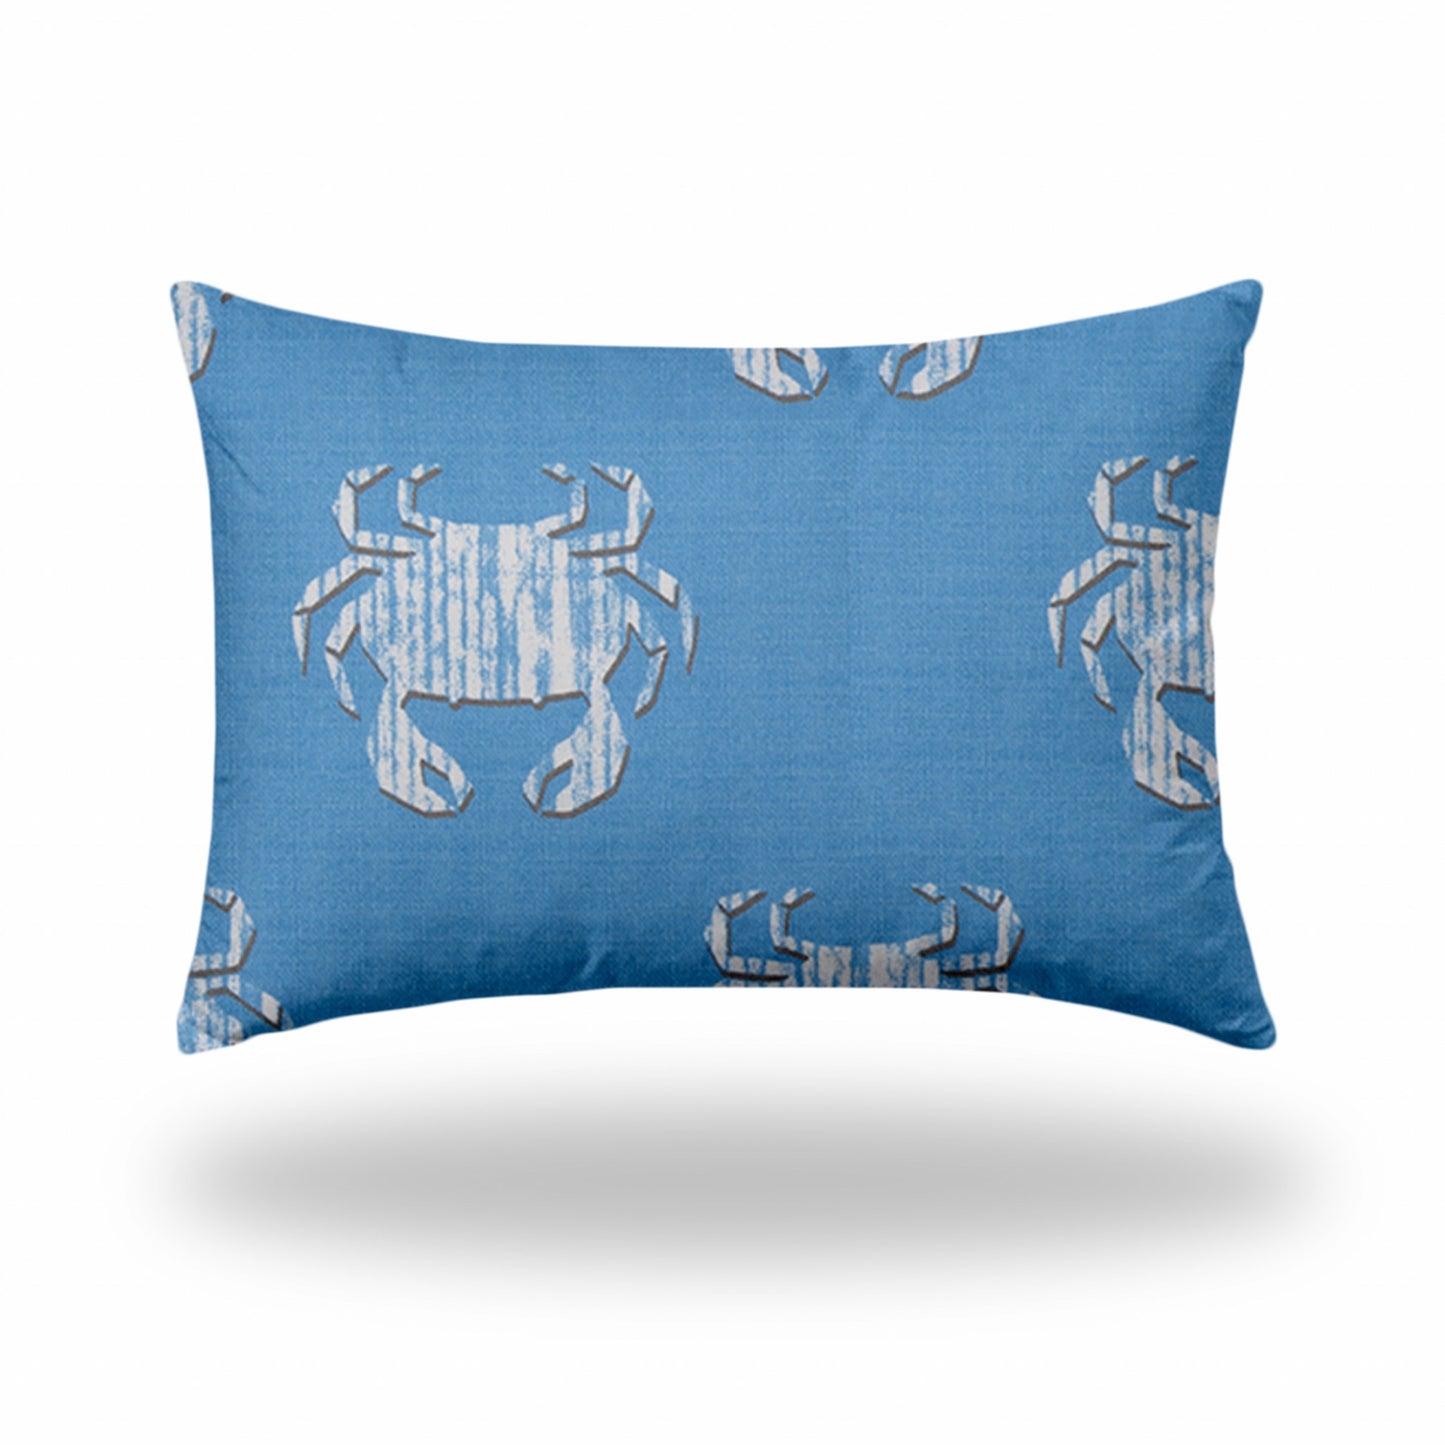 14" X 20" Blue And White Crab Zippered Coastal Lumbar Indoor Outdoor Pillow